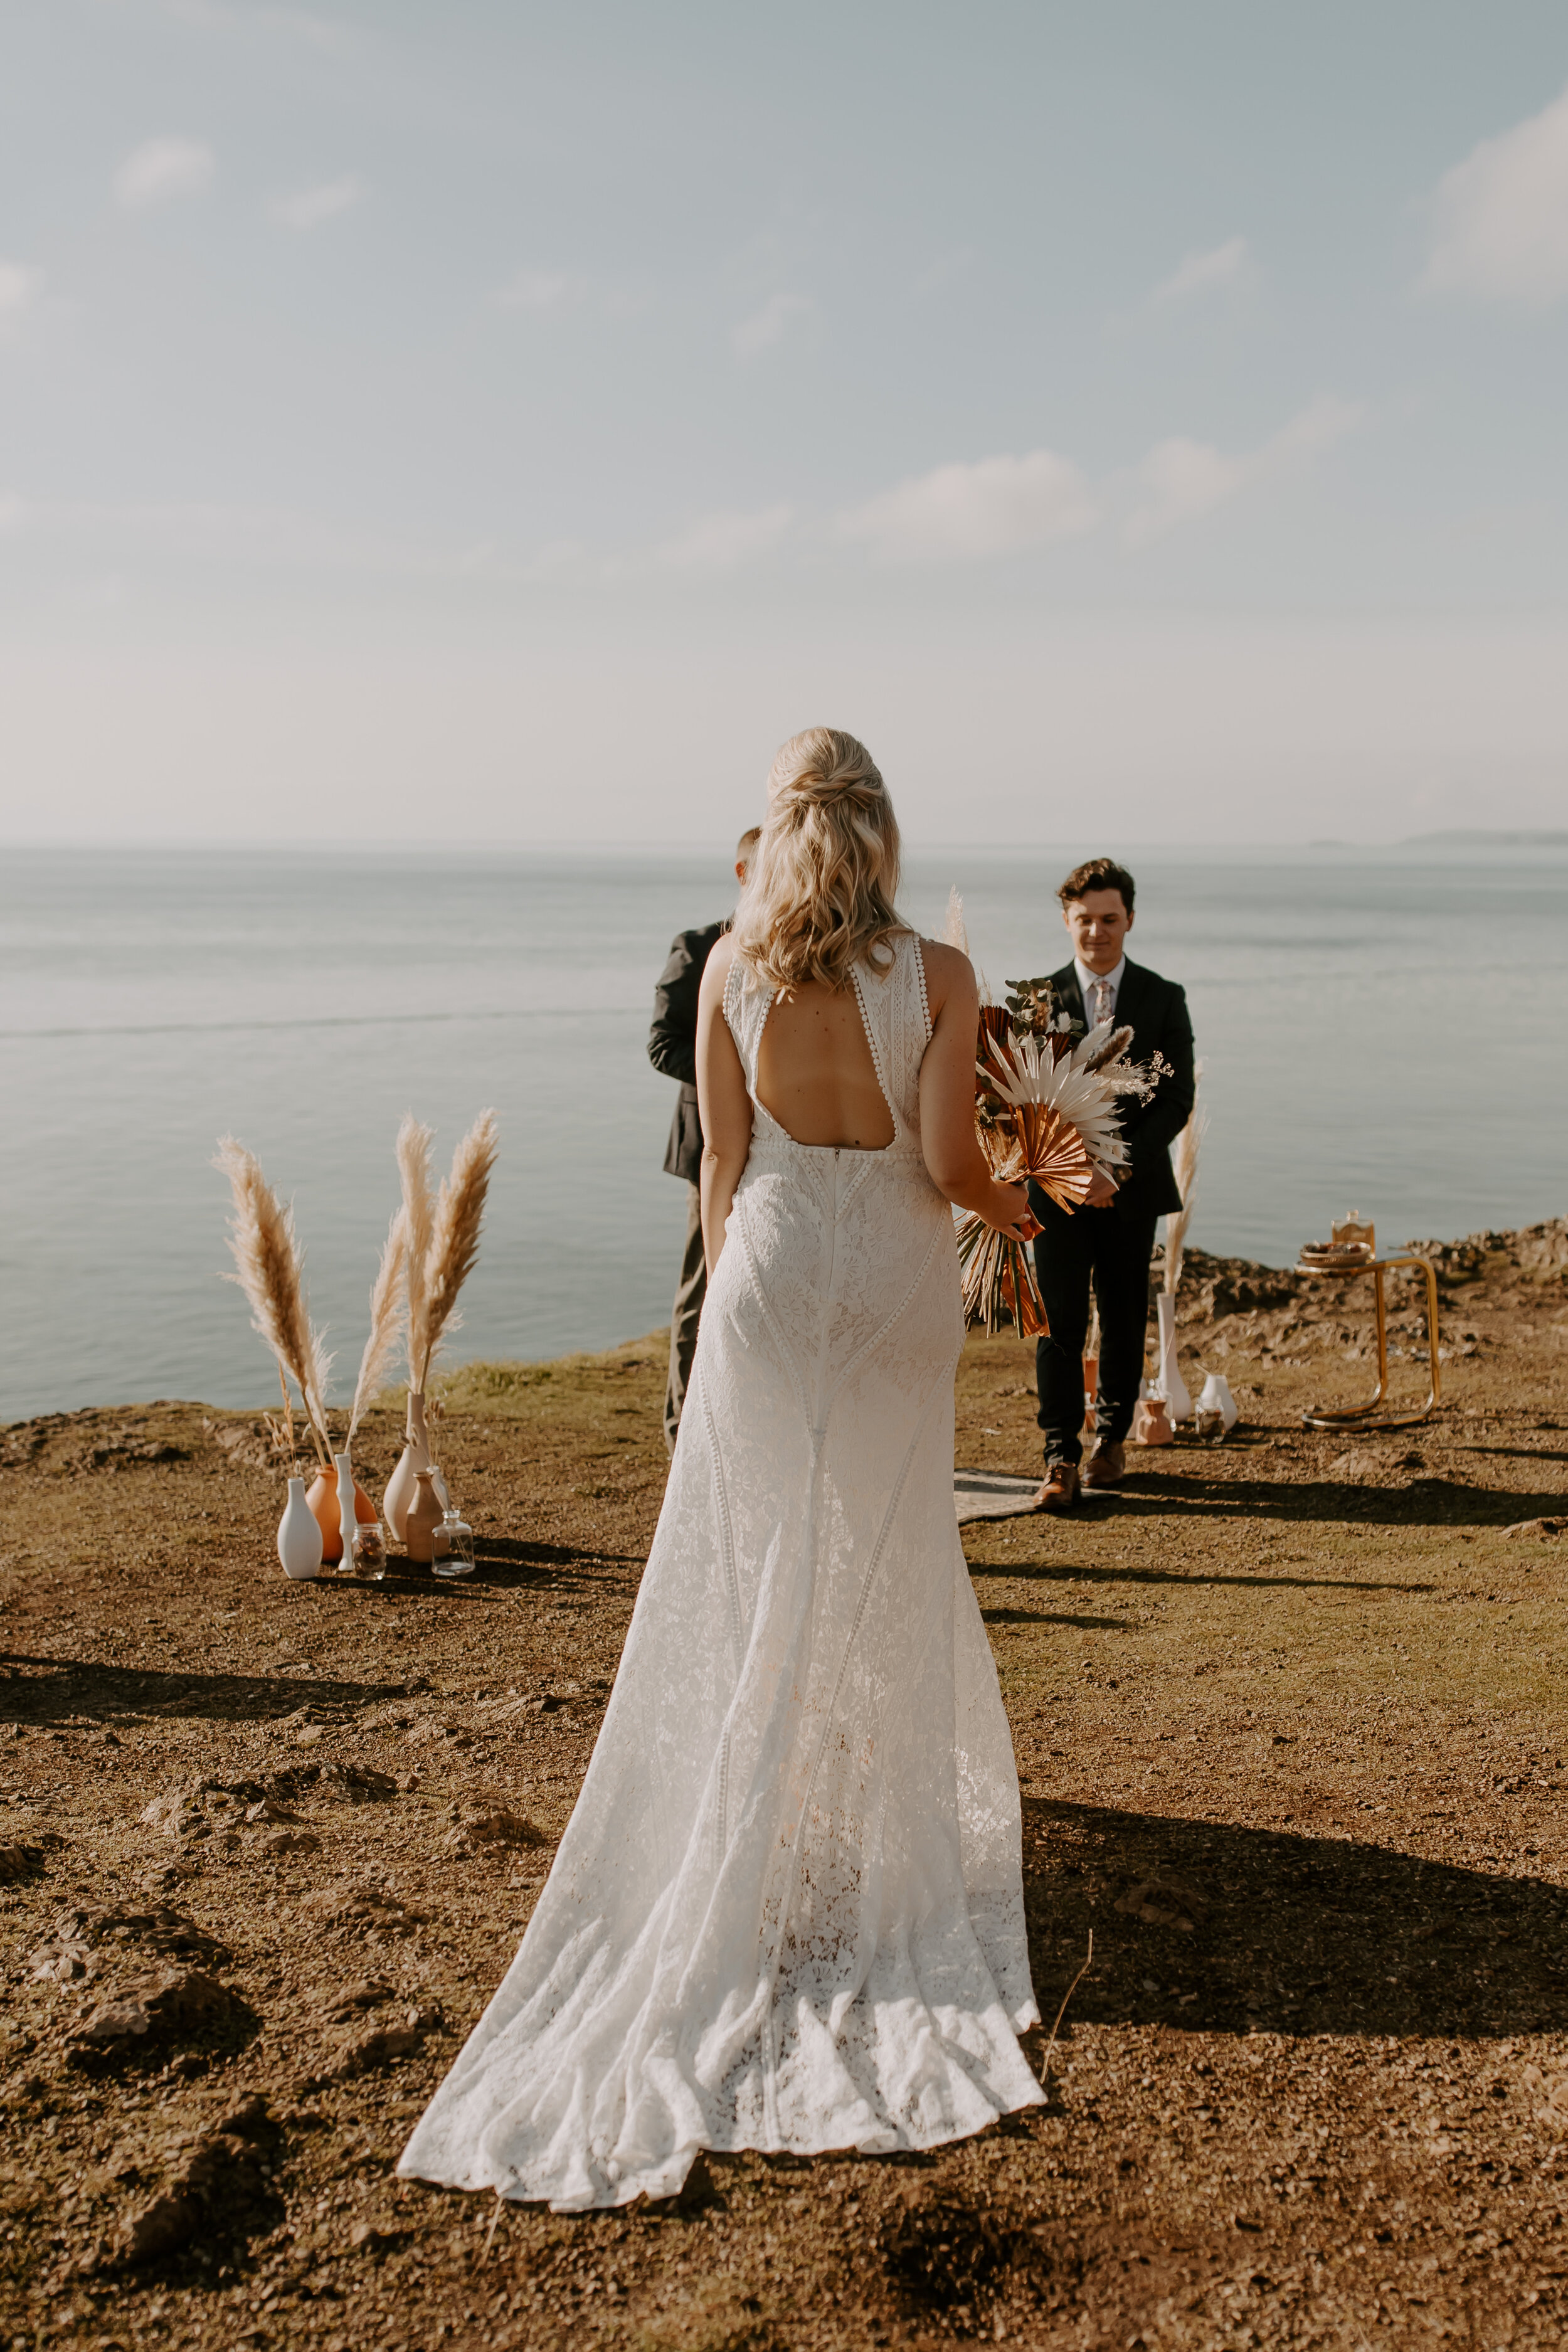  Georgie and Peyton’s Cannon Beach elopement in Rish Rio wedding dress 